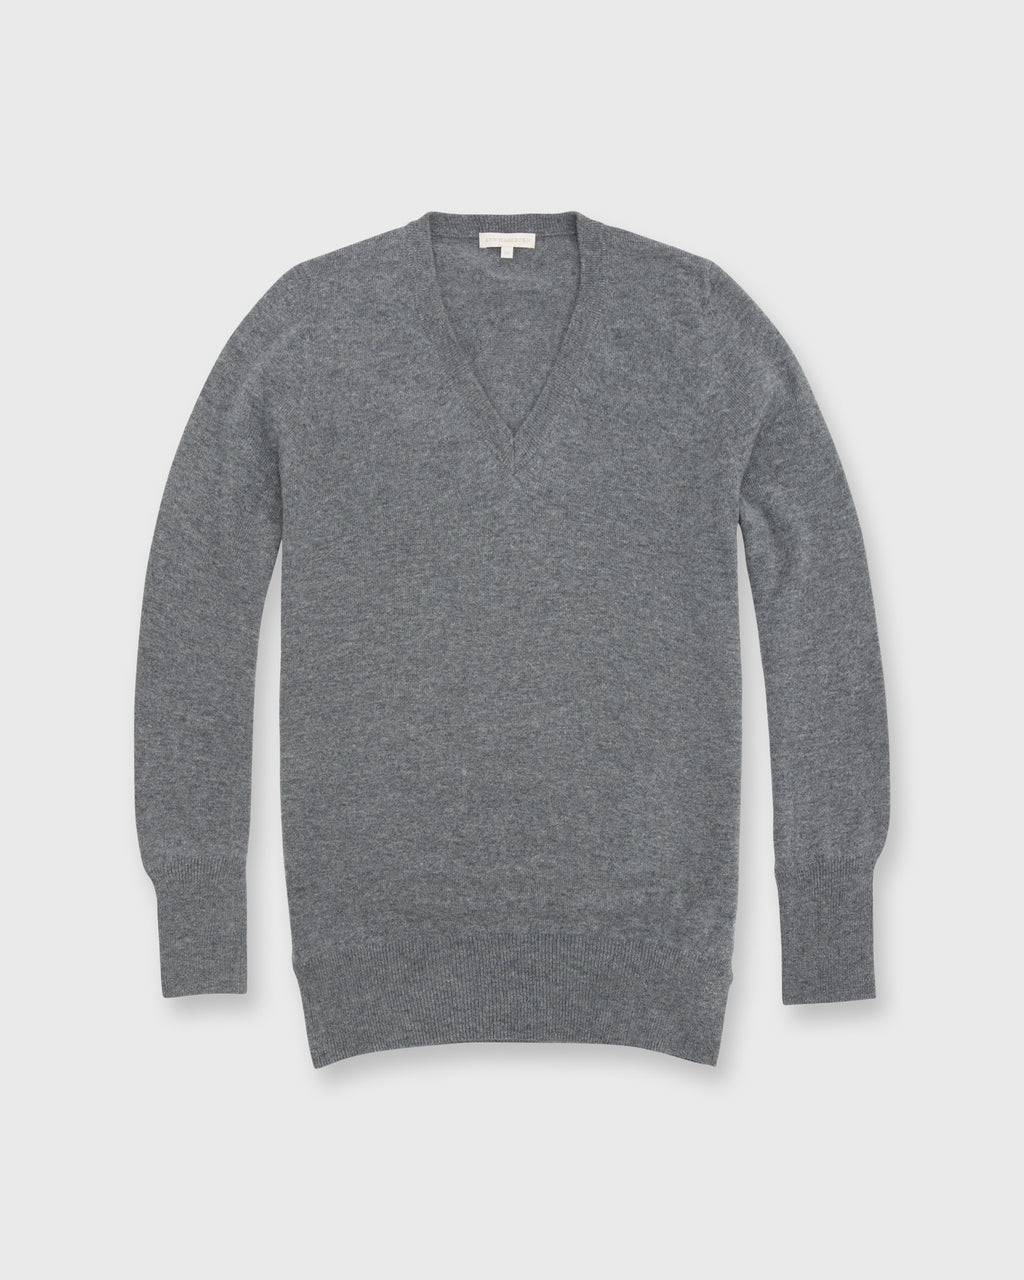 The Better Sweater | Shop Ann Mashburn